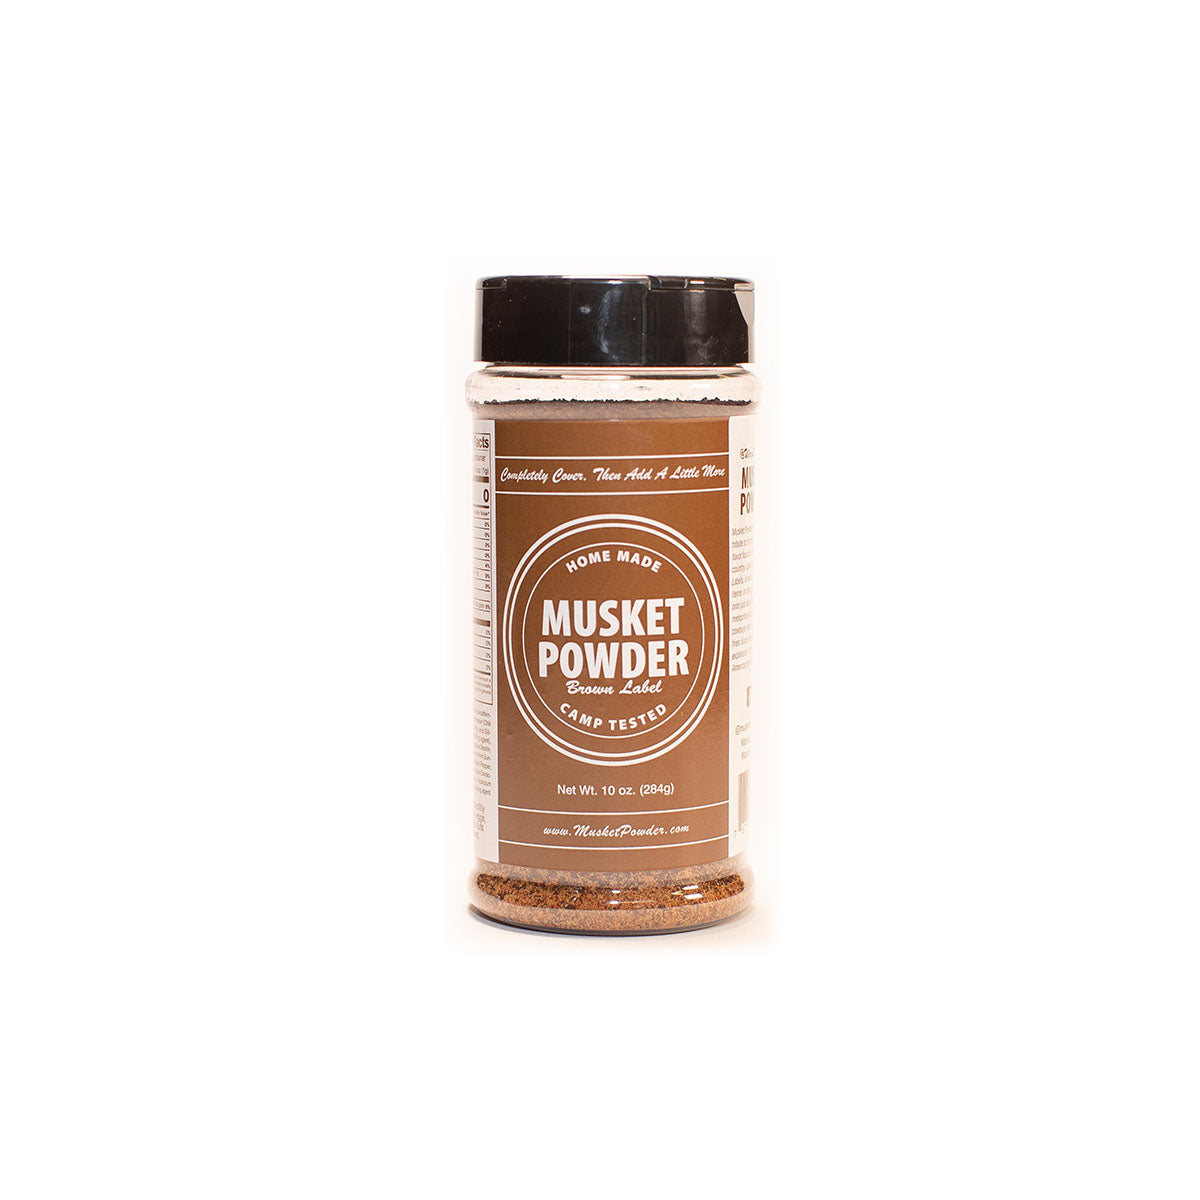 Musket Powder Brown Label